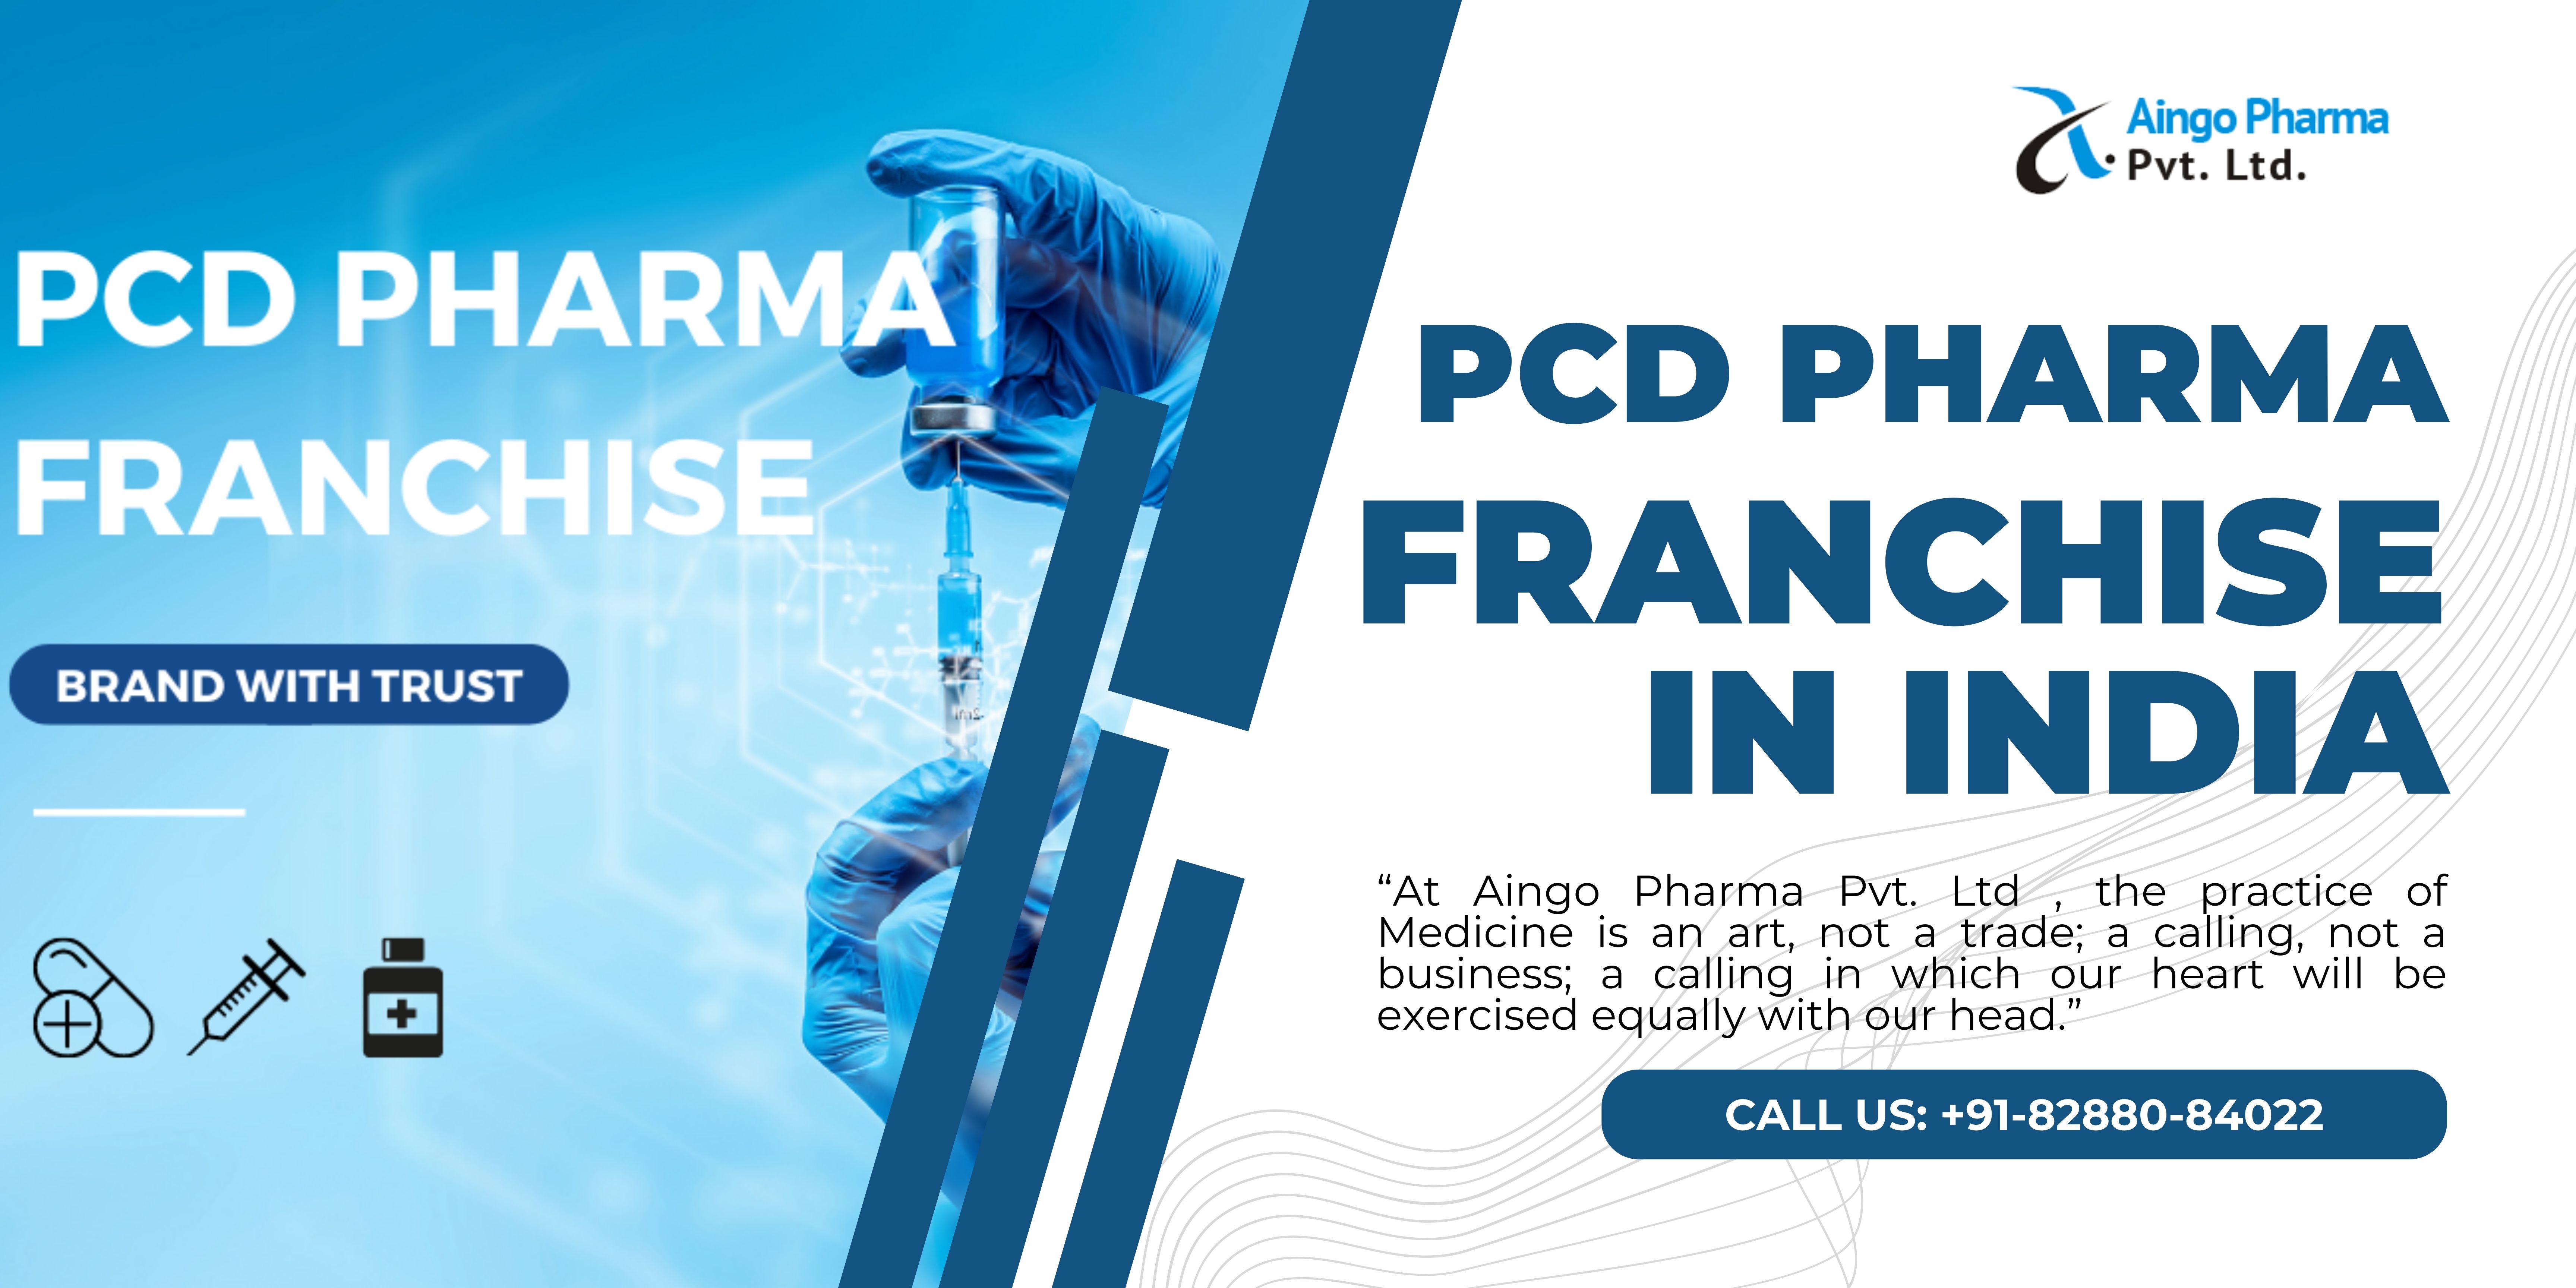 Anti Malarial range PCD pharma franchise company in Chandigarh